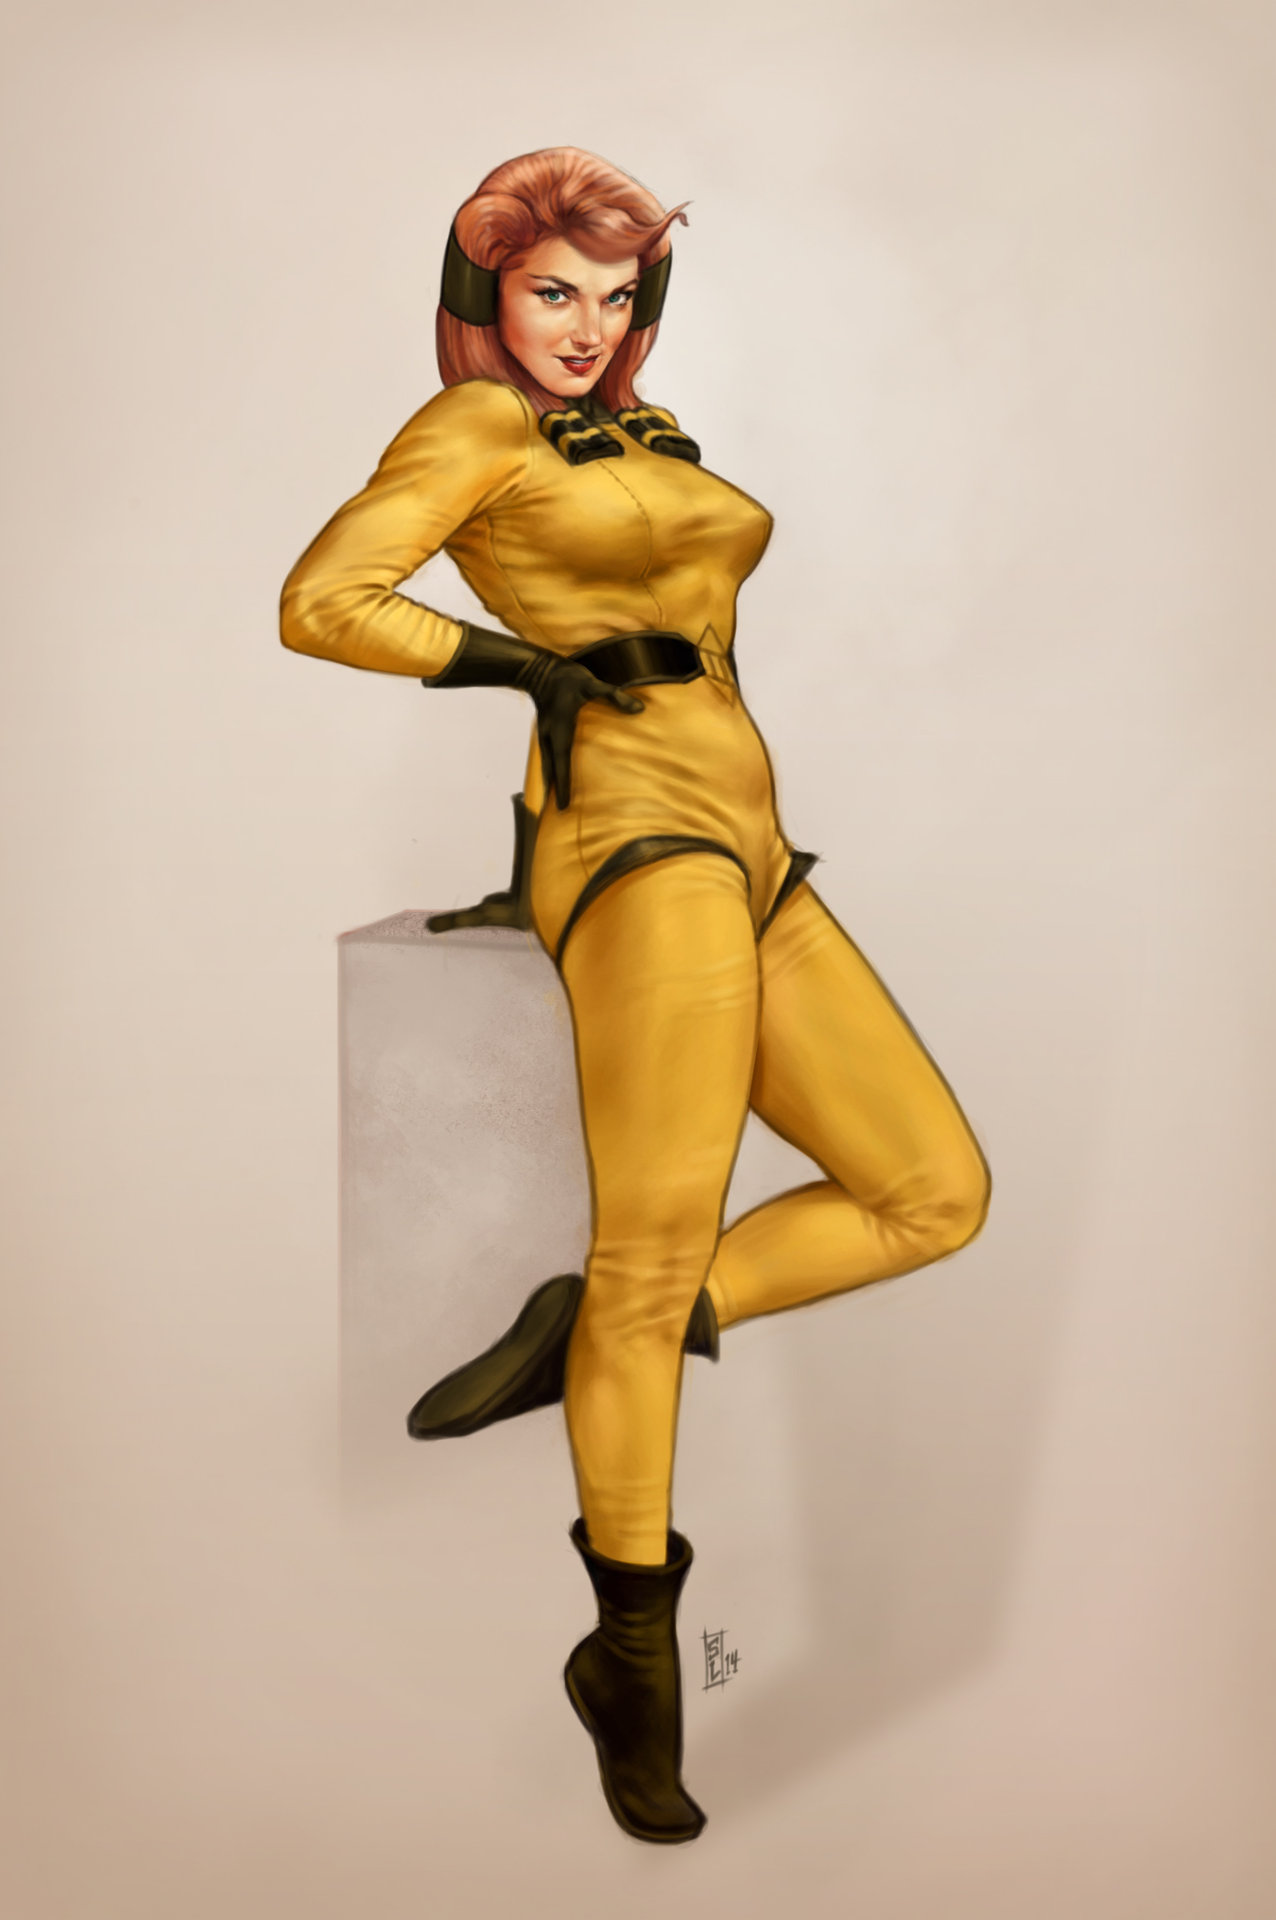 classy-female-superhero-pin-up-art-by-stephen-langmead3